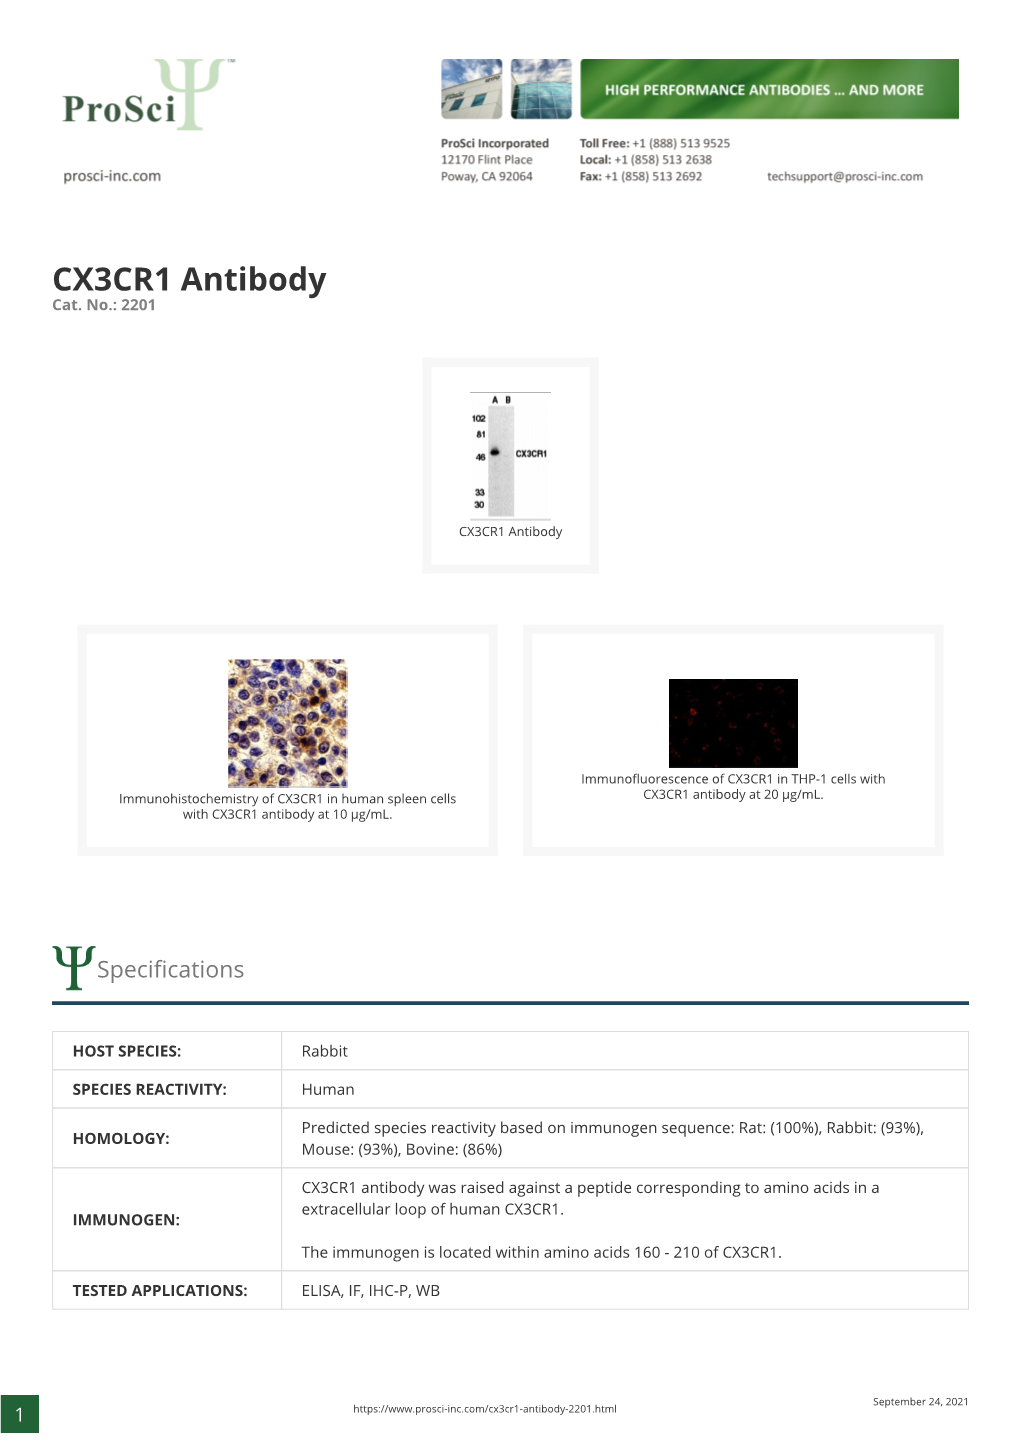 CX3CR1 Antibody Cat